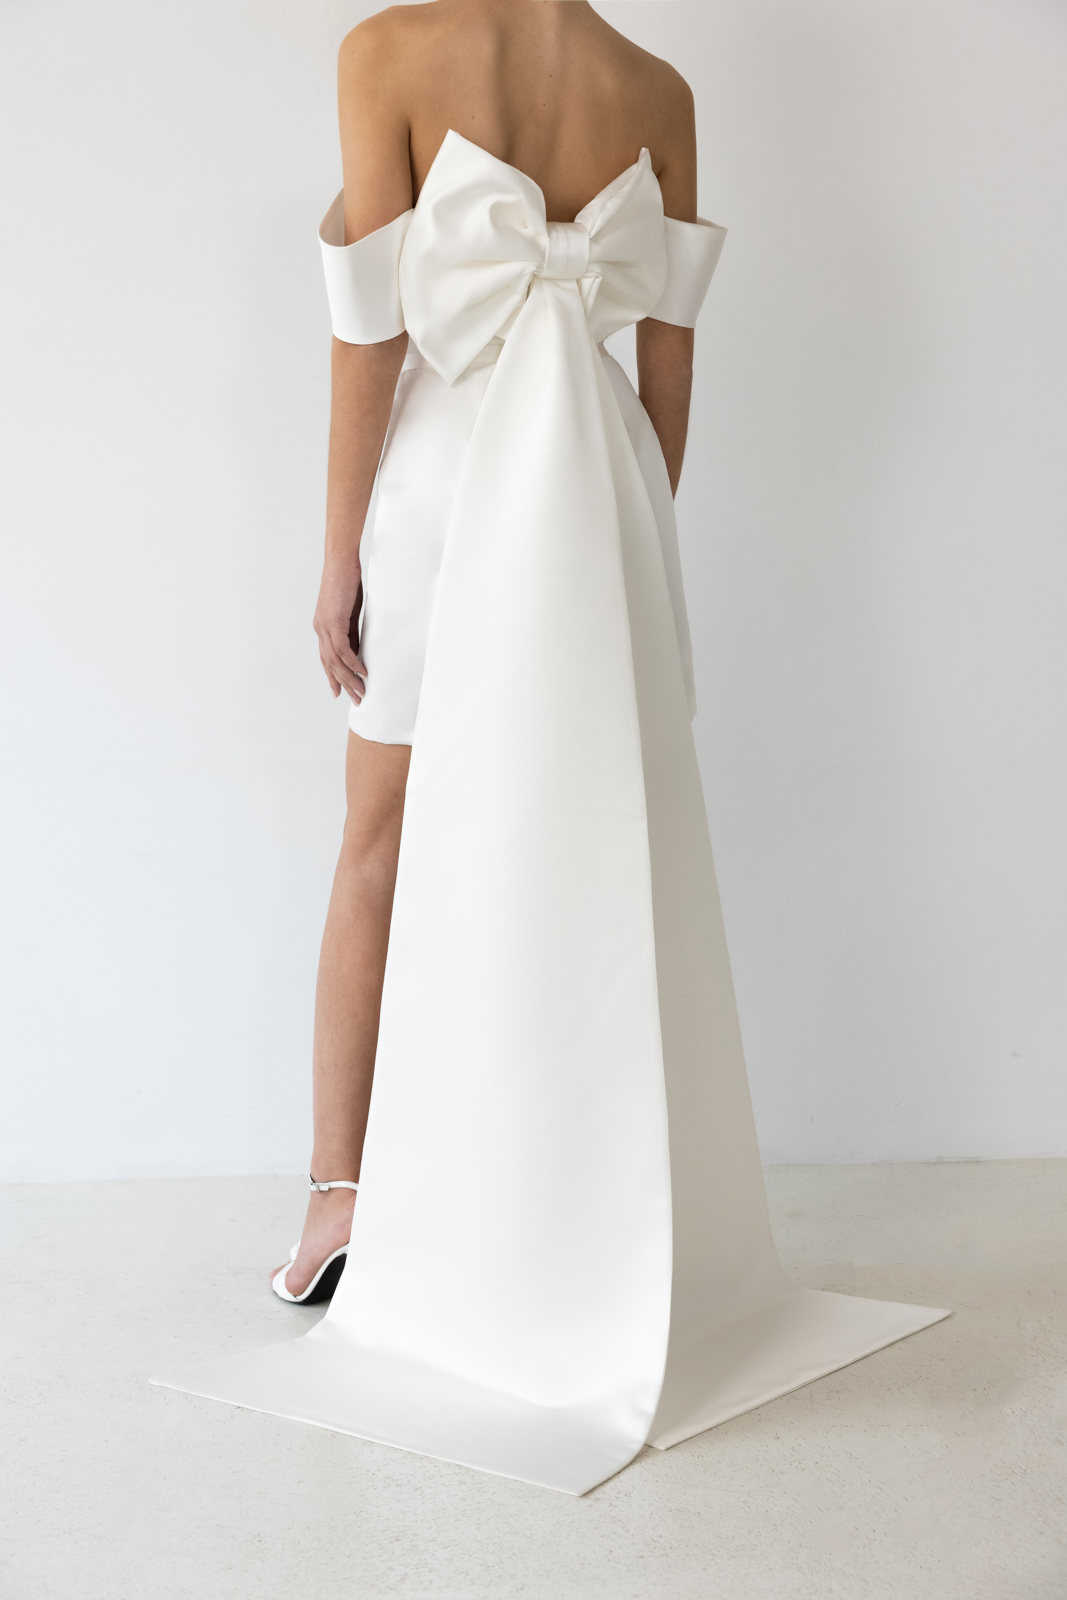 white bow dress